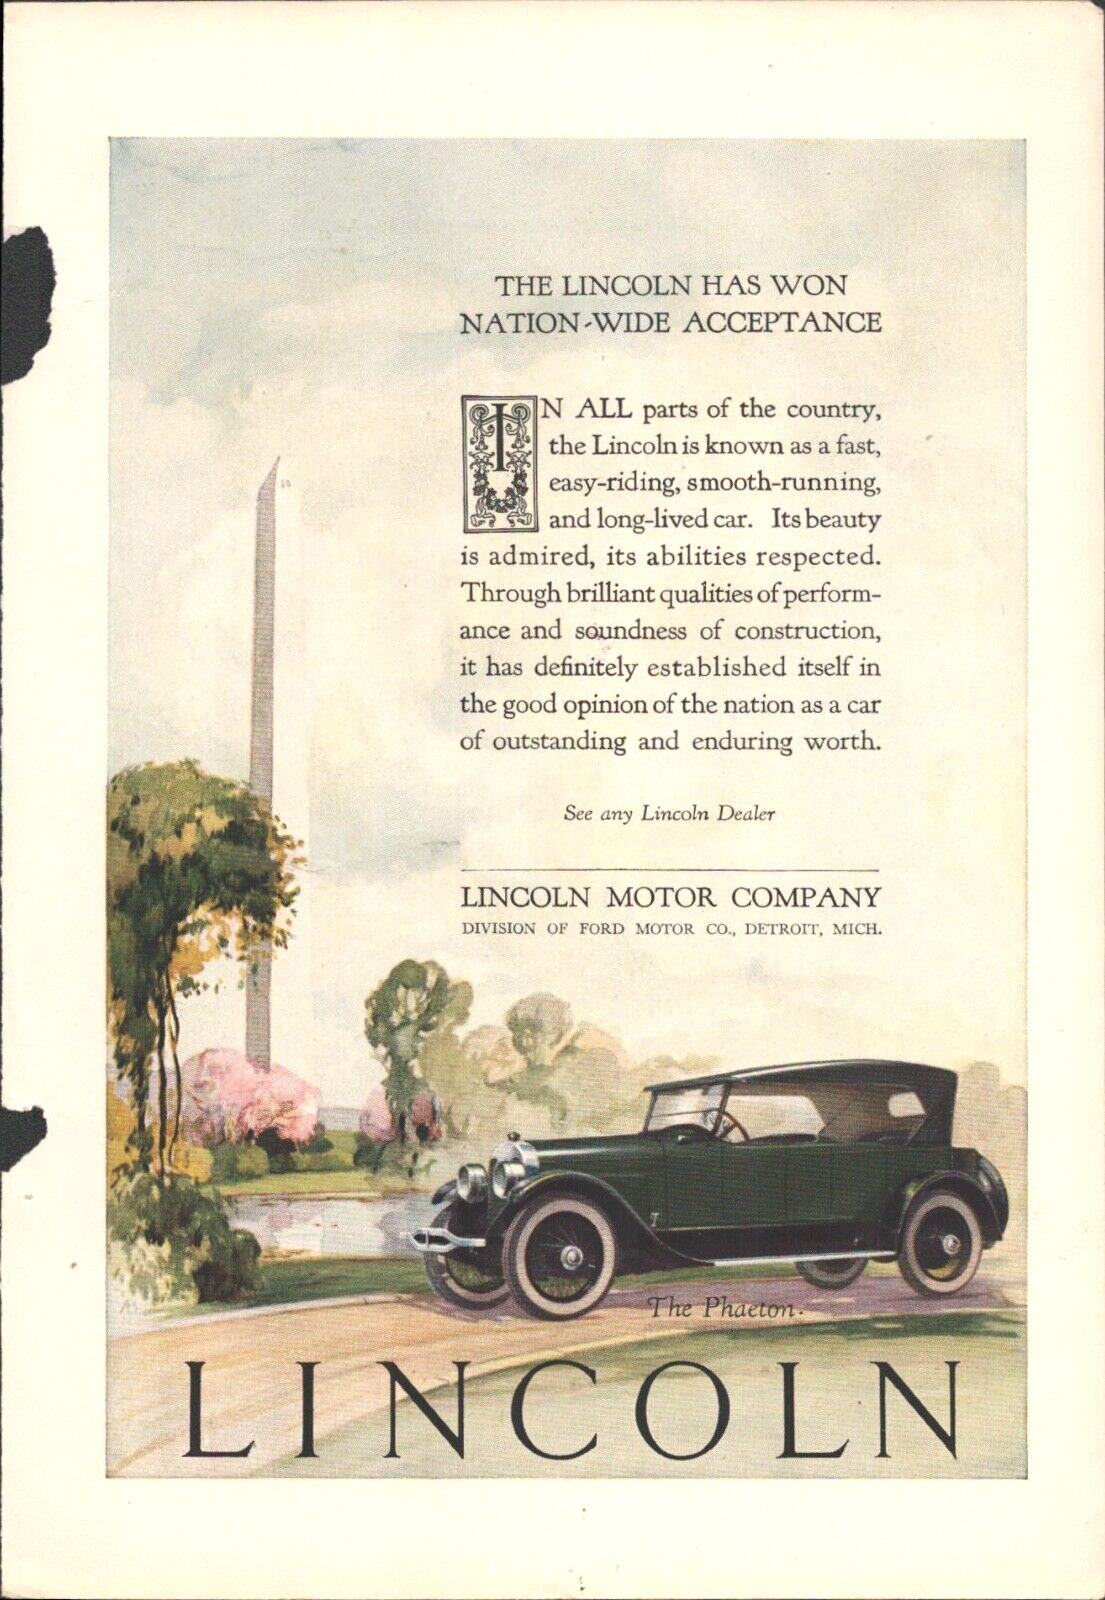 1924 LINCOLN MOTOR COMPANY (FORD) antique magazine advertisement THE PHAETON